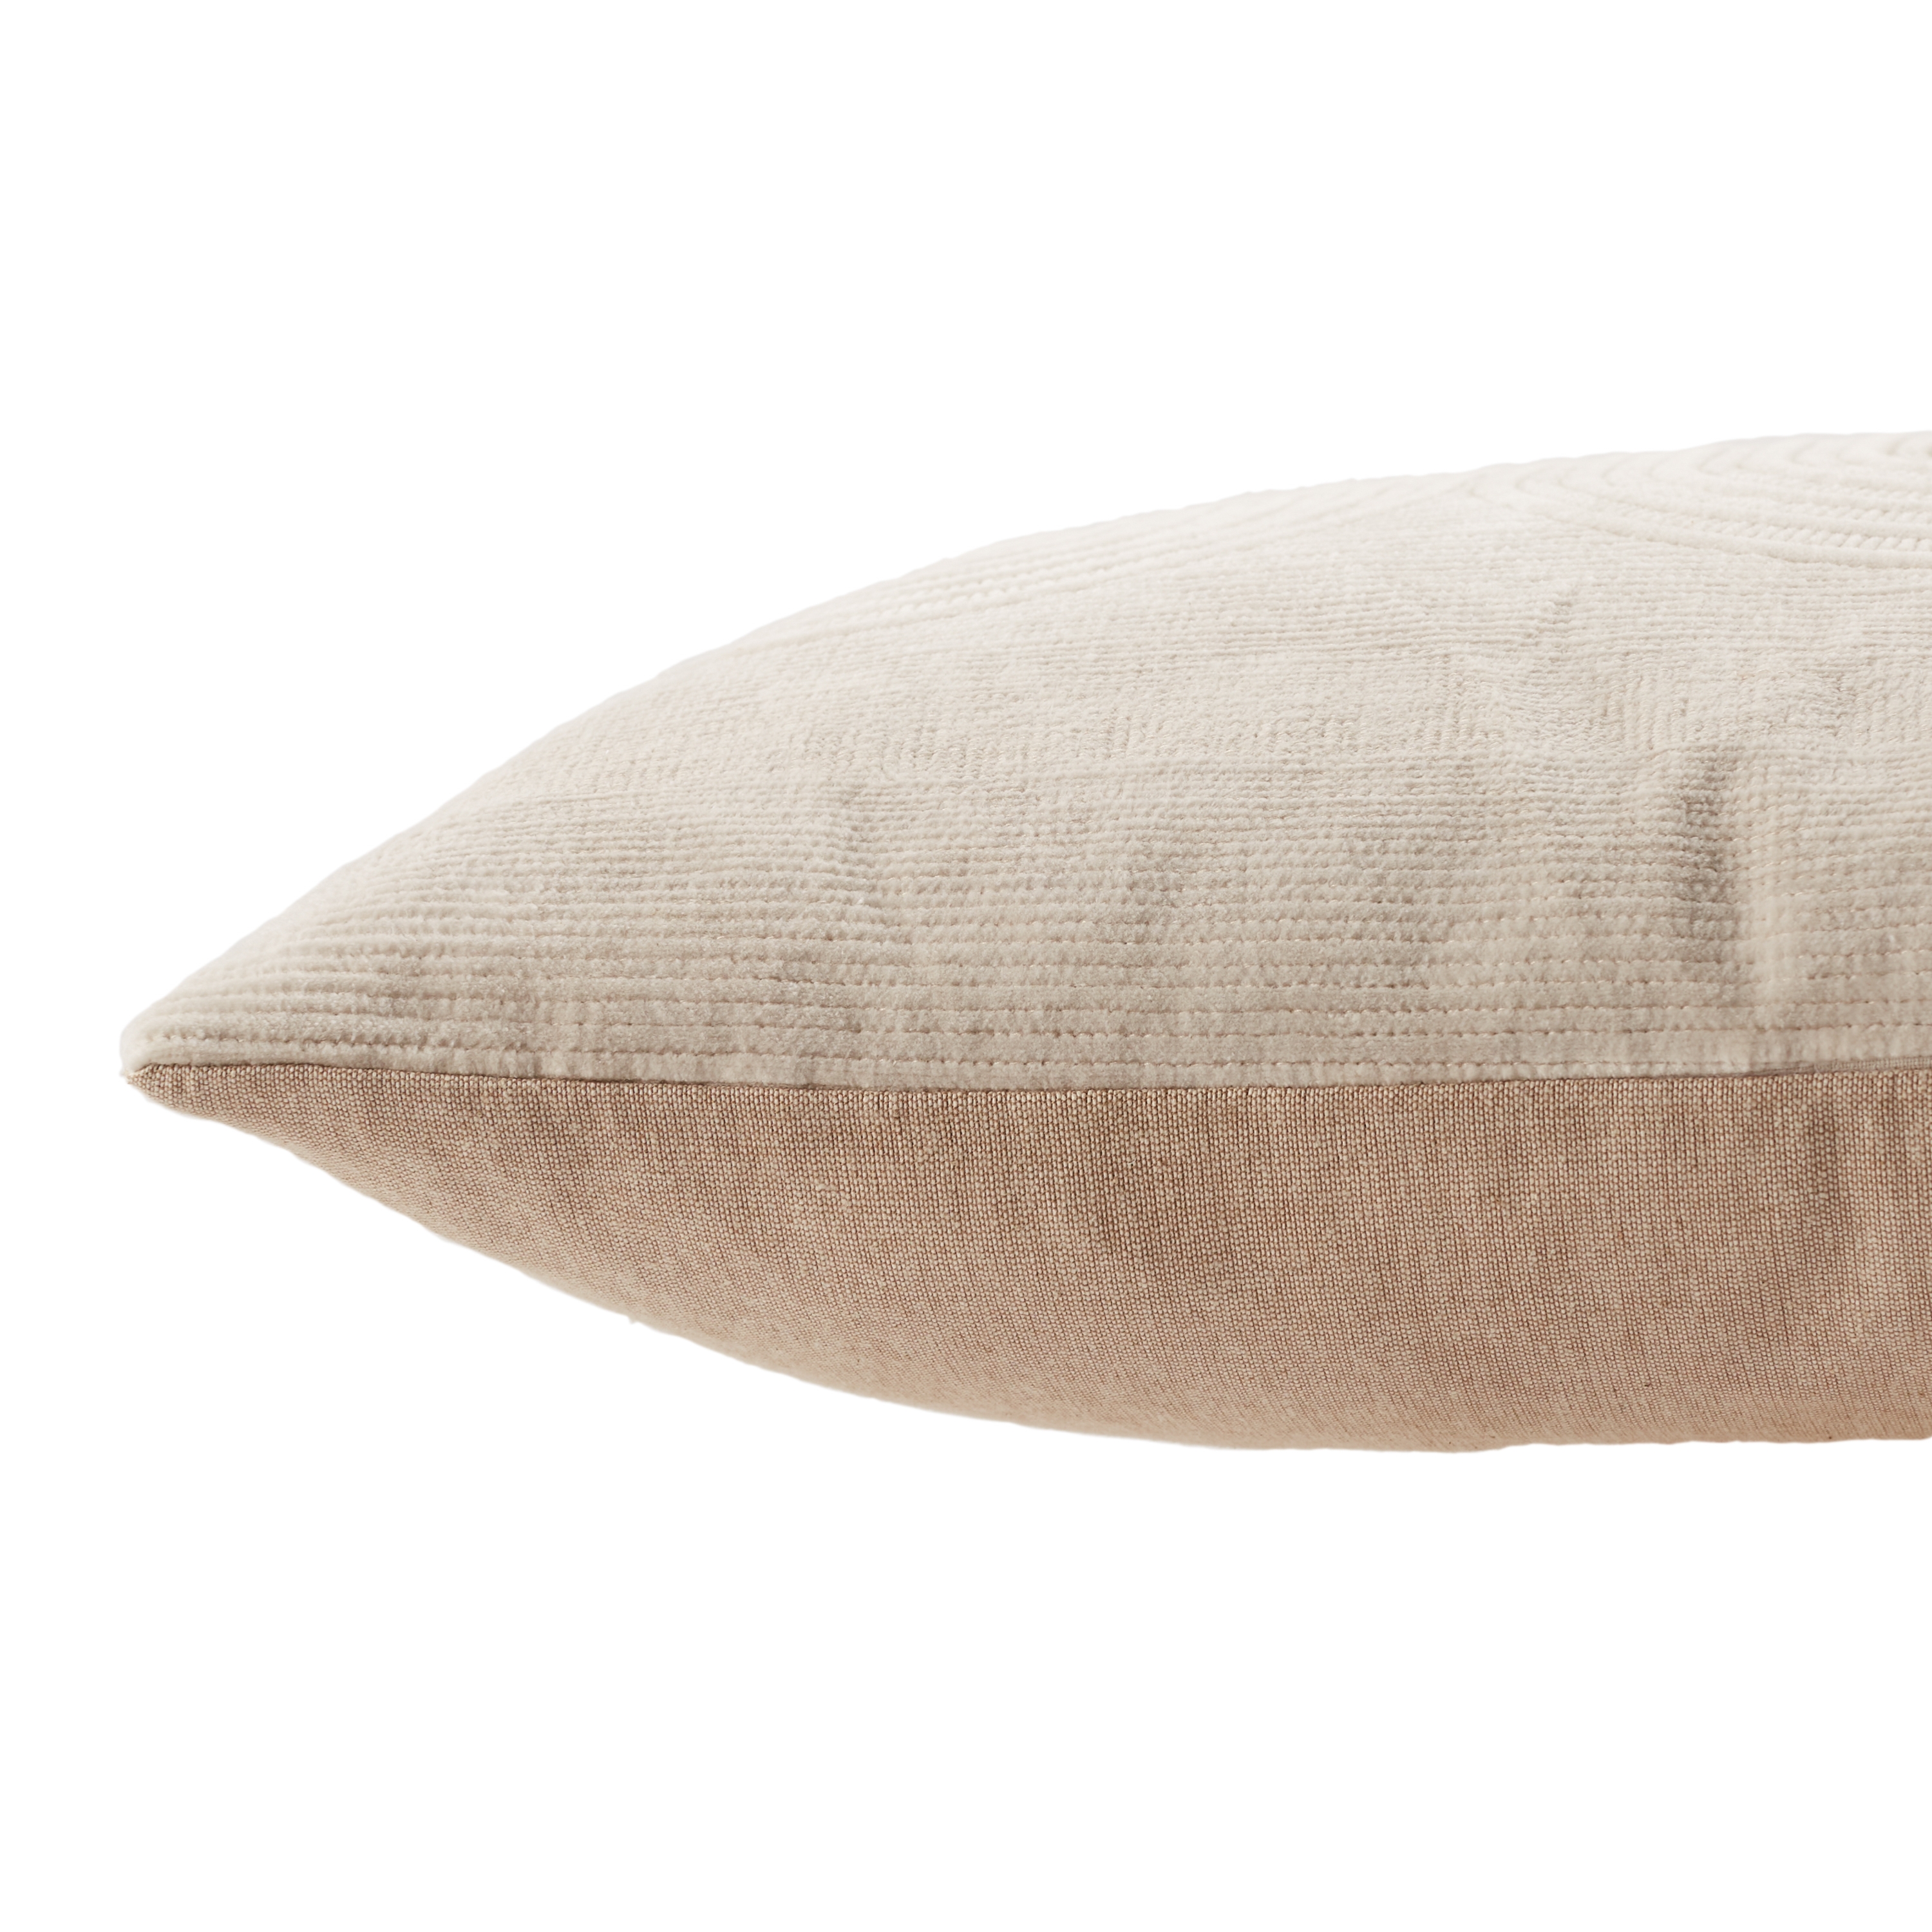 Deco Throw Pillow, Ivory, 22" x 22" - Image 2